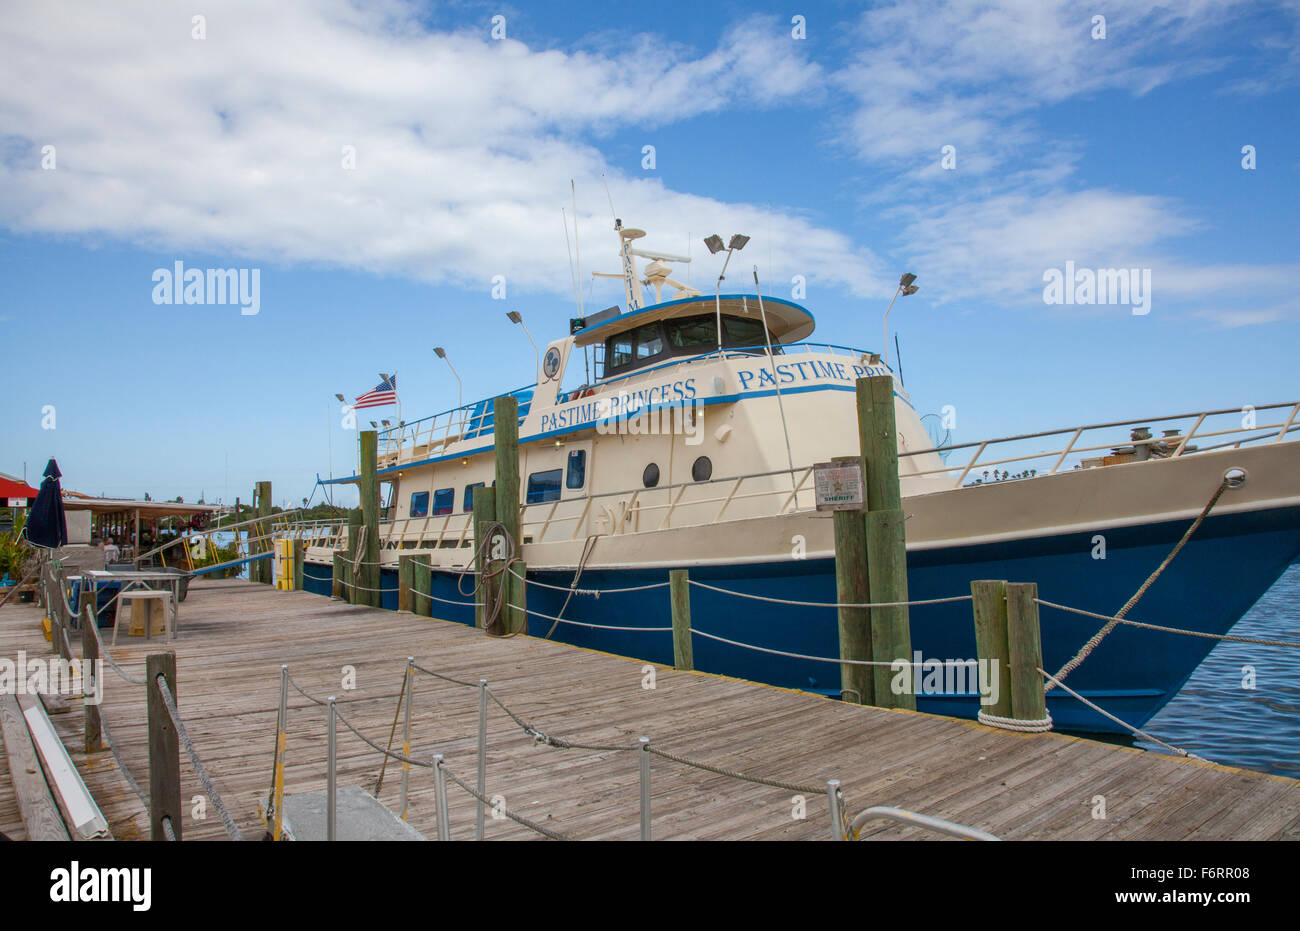 Pastime Princess cruise ship at New Smyrna Beach Florida Stock Photo